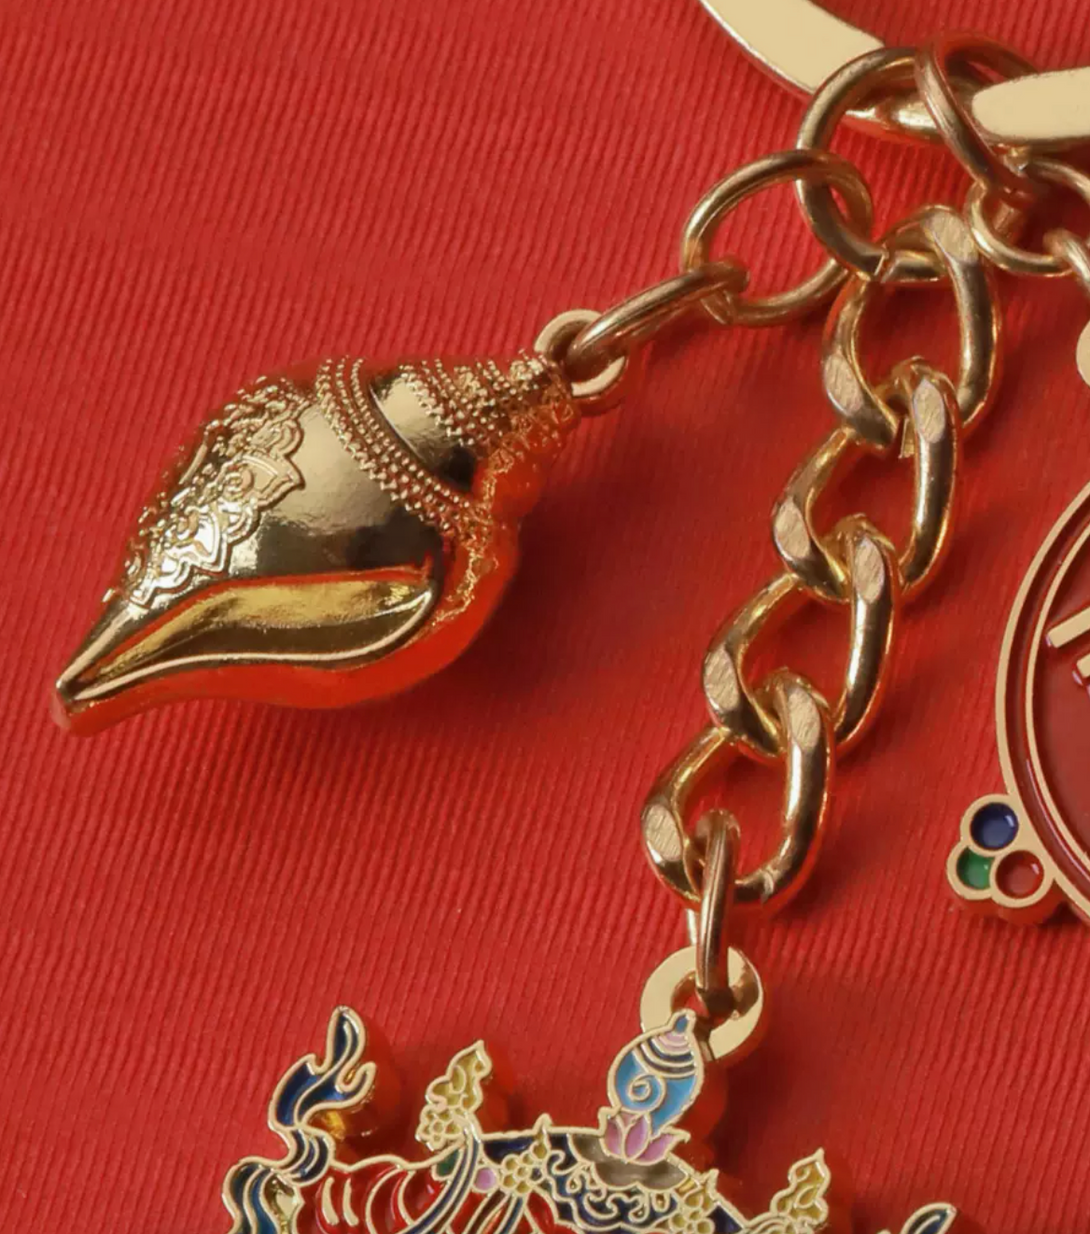 Authentic Potala Palace Eight Auspicious Keychain- Perfect Buddhist Souvenir!